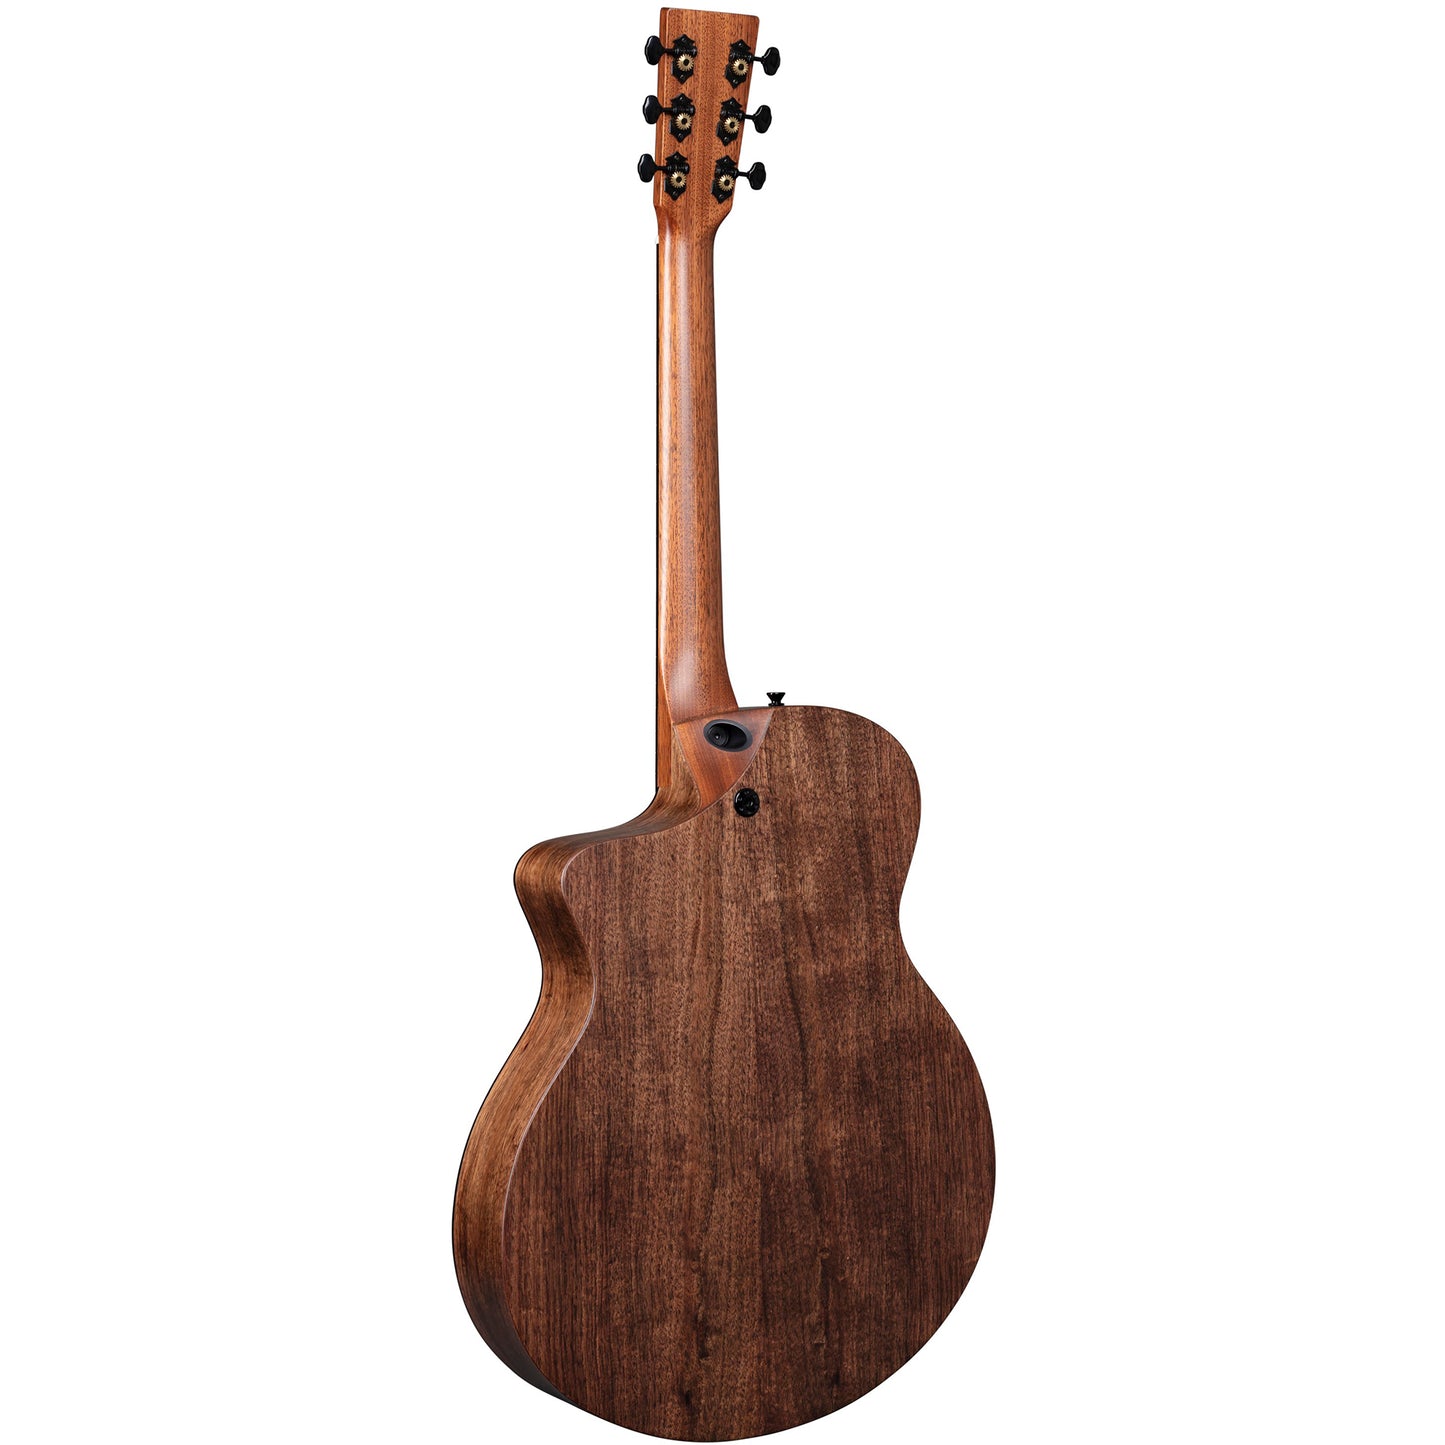 Martin SC-10E Acoustic-Electric Guitar - Natural